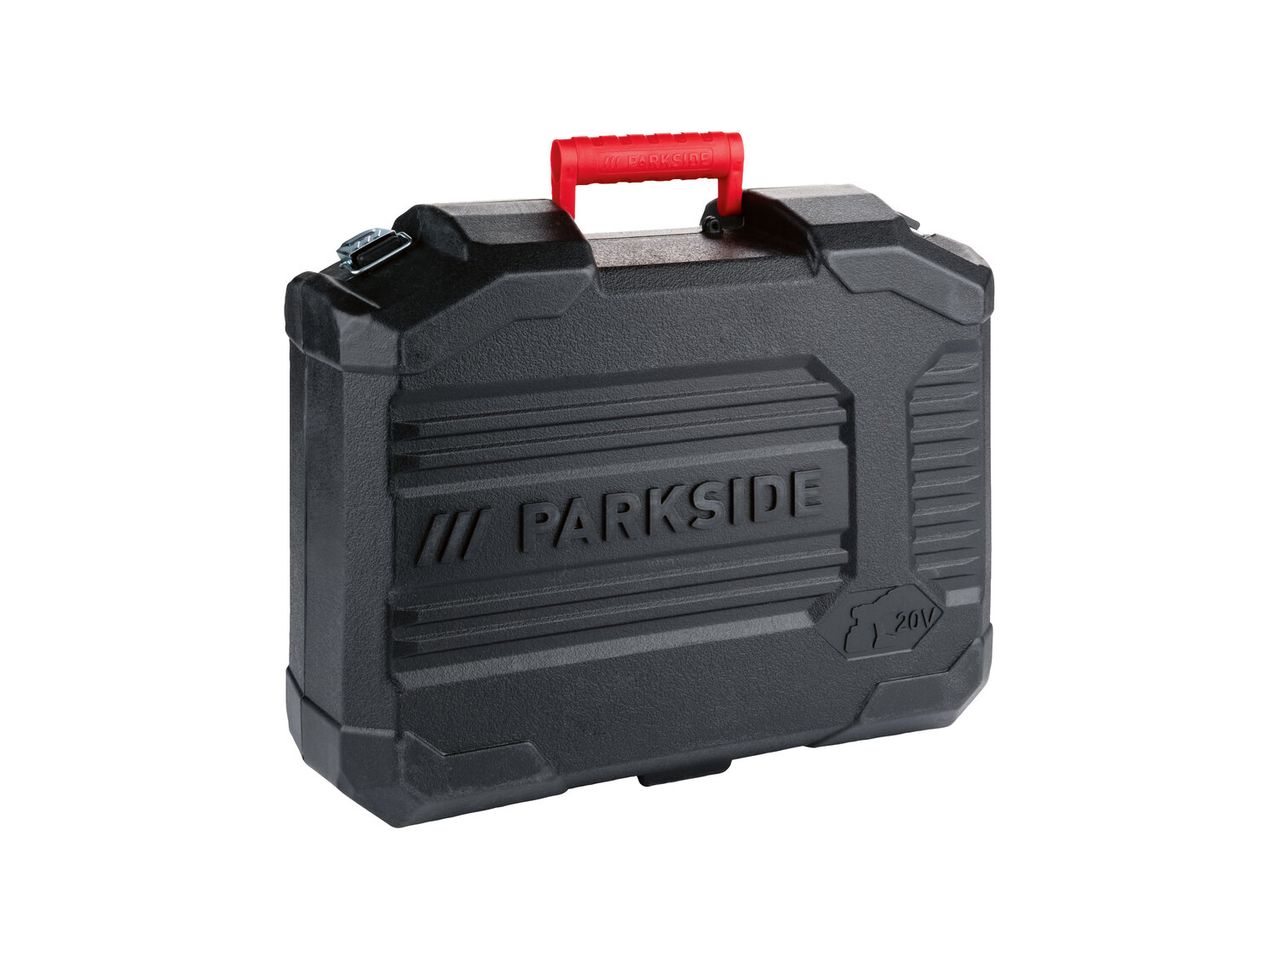 Ver empliada: Parkside® Pistola de Pintura 20 V sem Bateria - Imagem 3